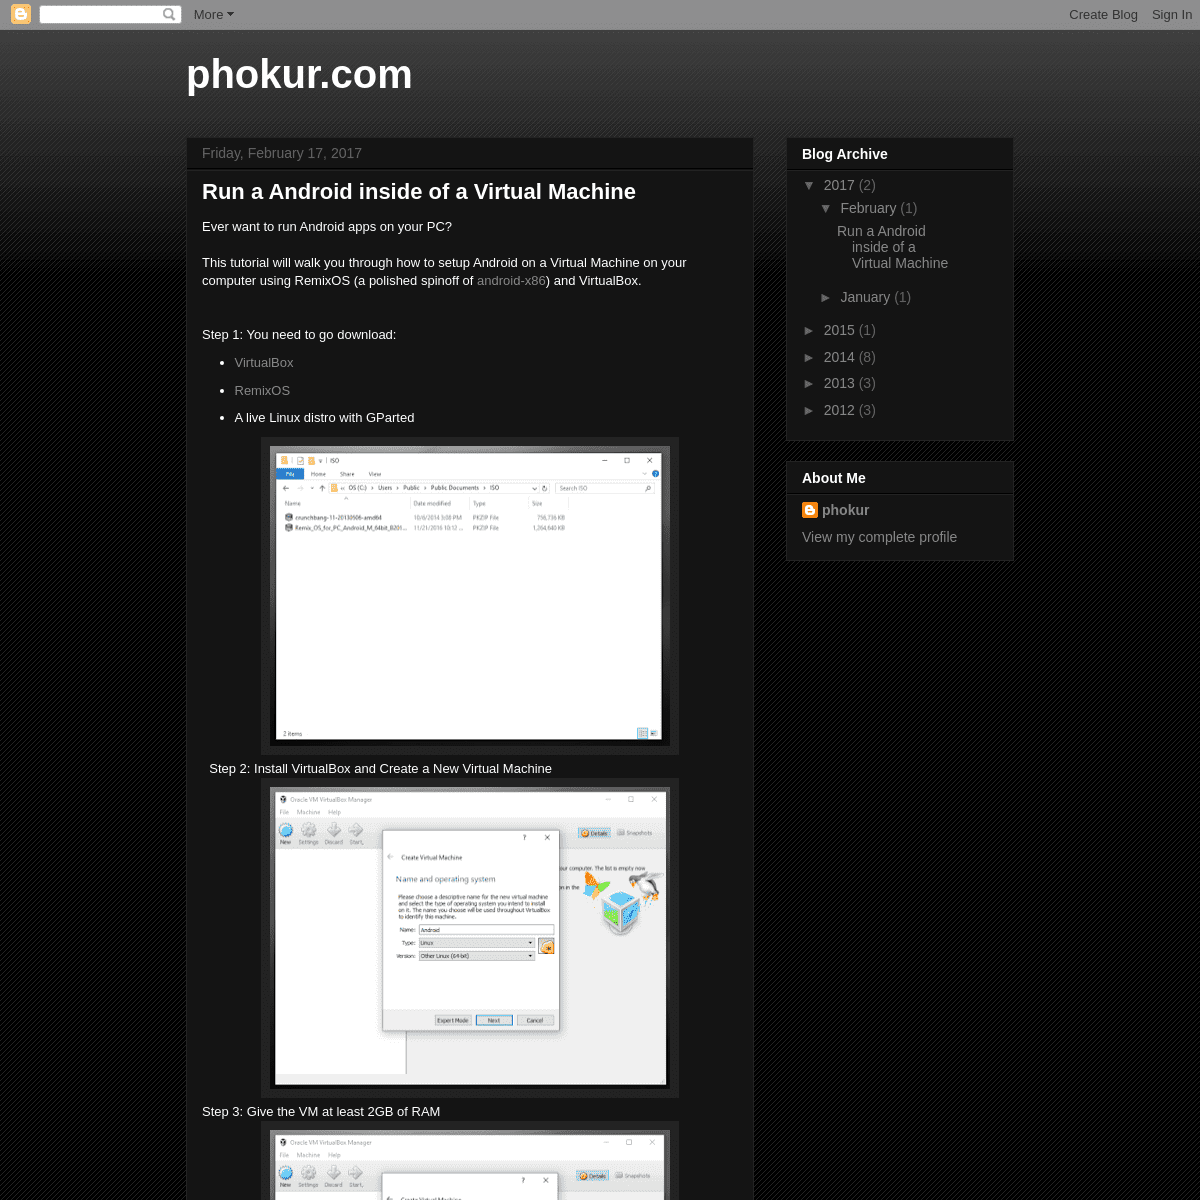 A complete backup of phokur.blogspot.com